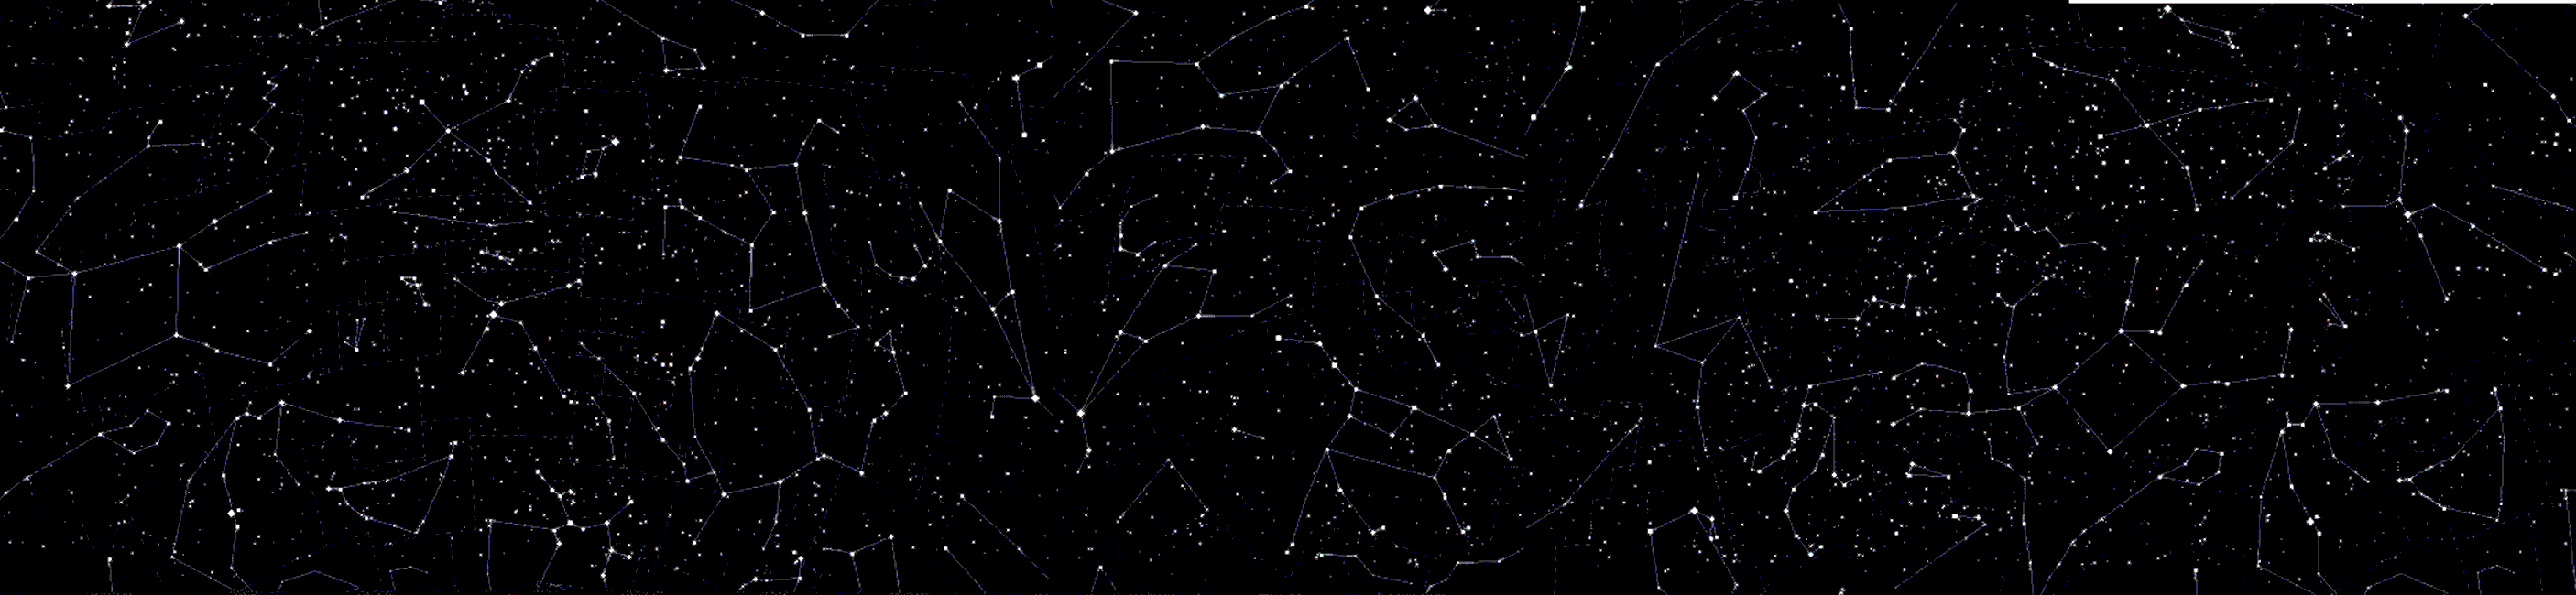 sternenhimmel